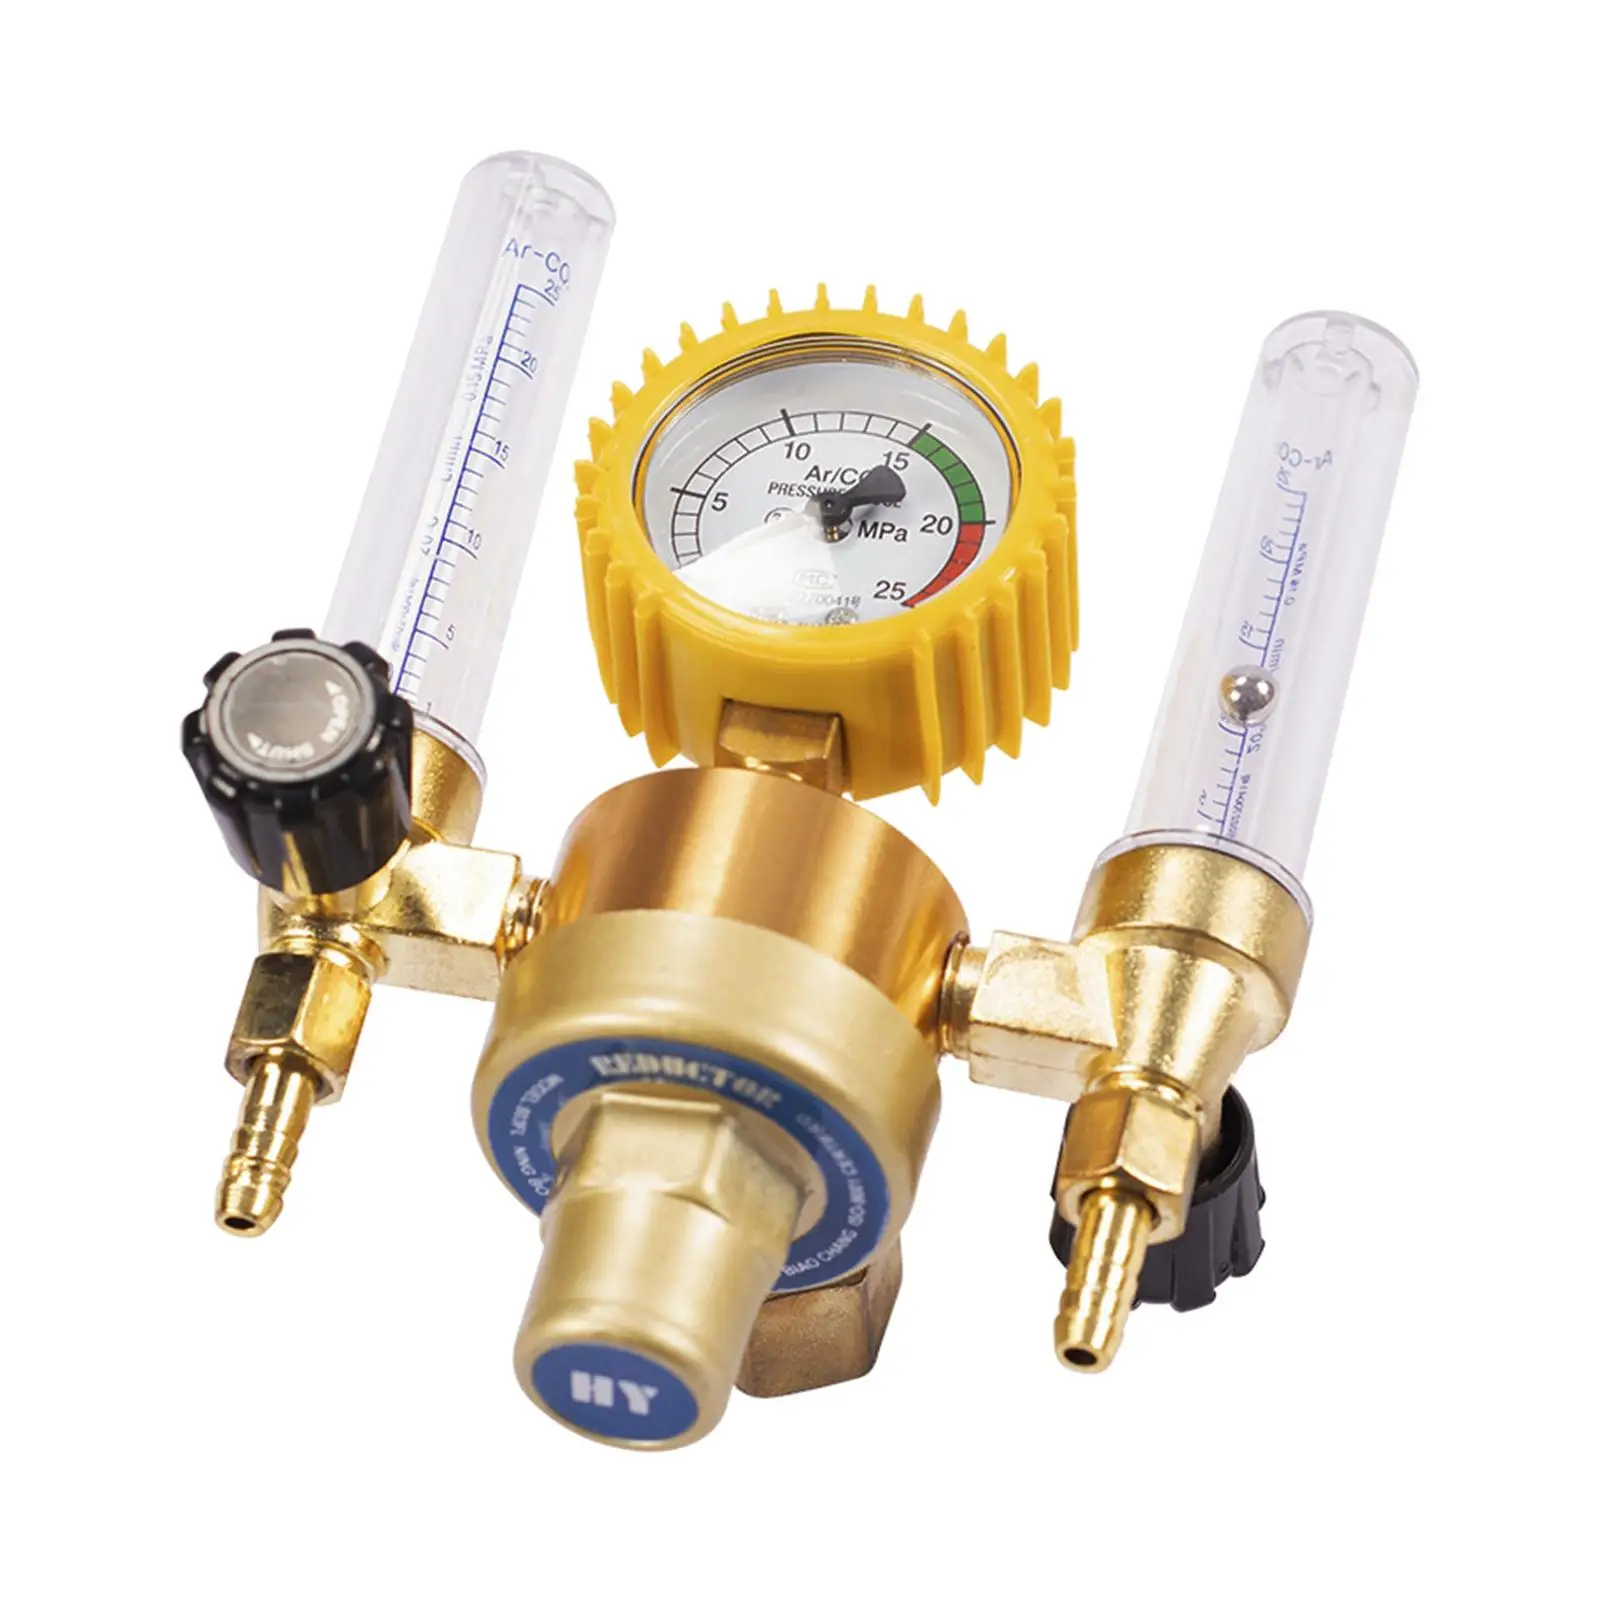 Precise Argon Gas Regulator Valve Double Tube Flowmeter Welding Supplies